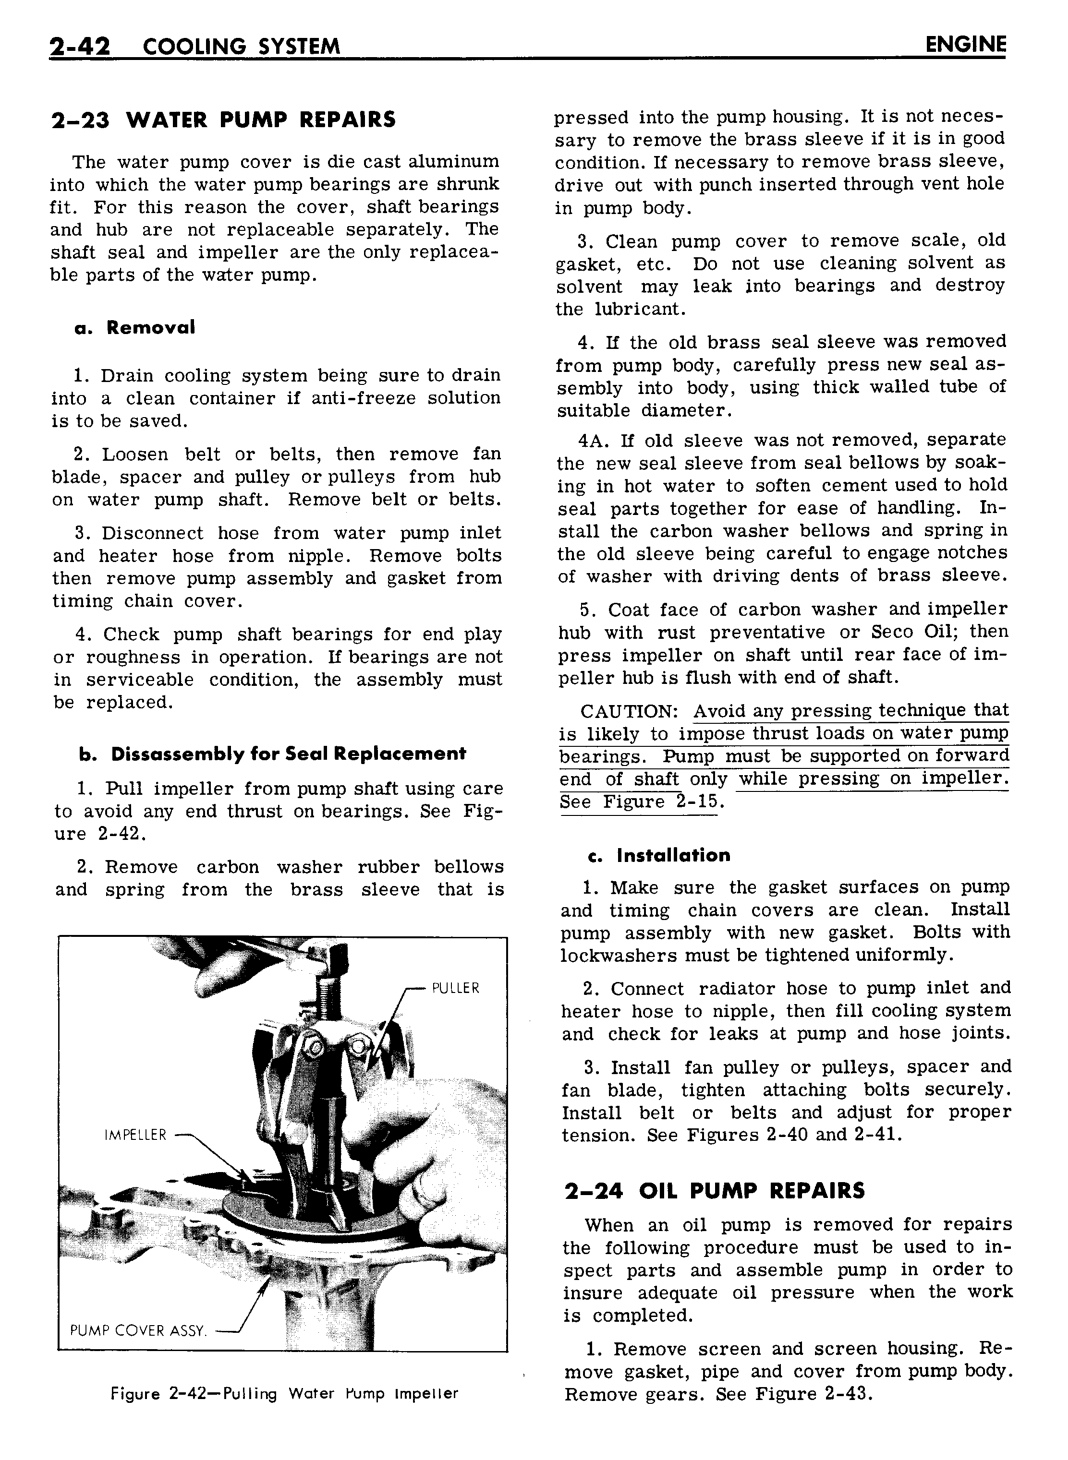 n_03 1961 Buick Shop Manual - Engine-042-042.jpg